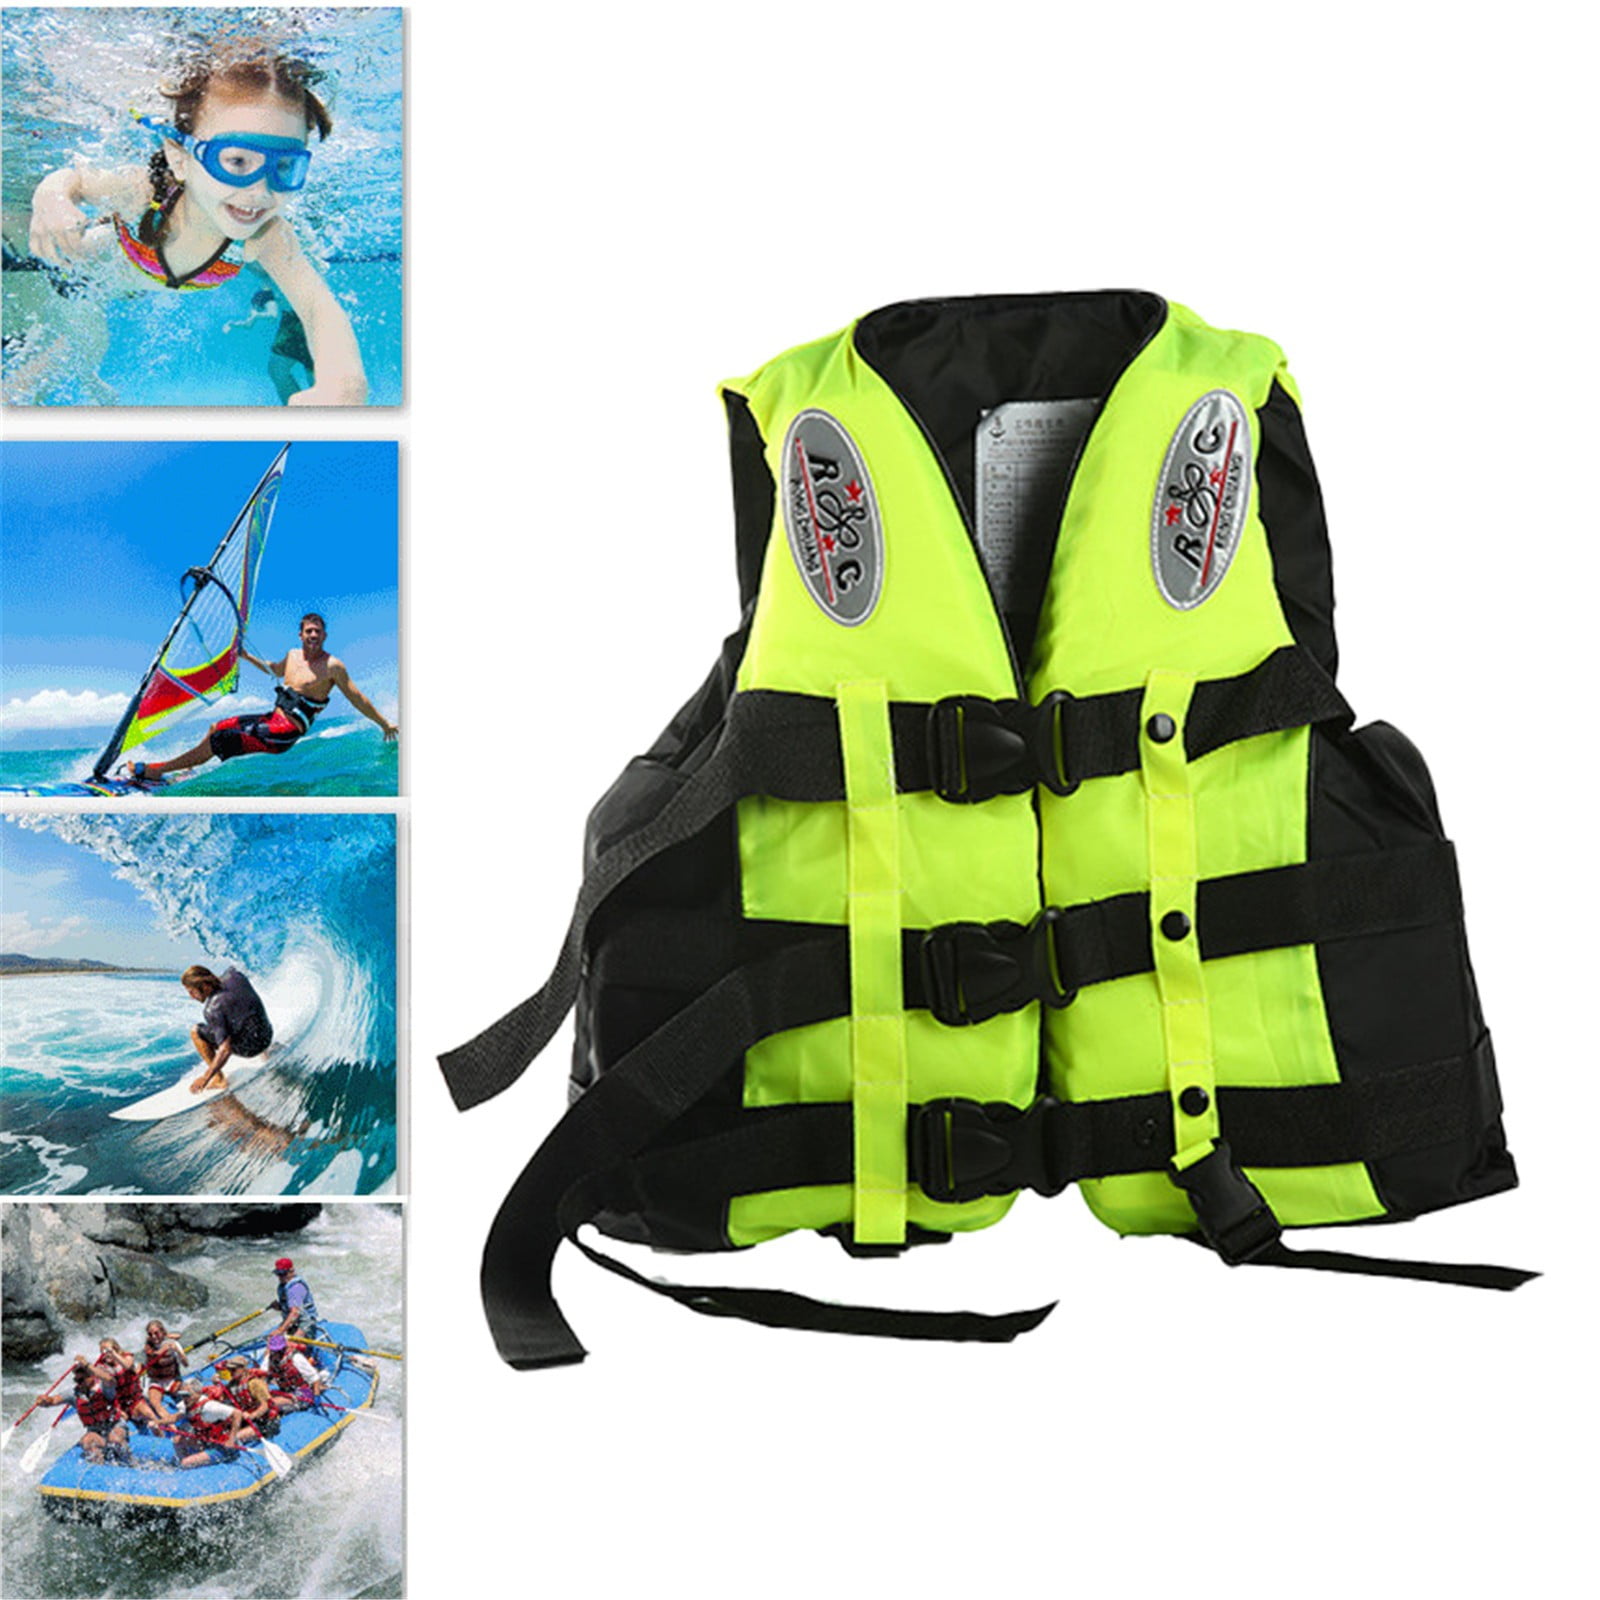 Adult Outdoor Buoyancy Aid Sailing Kayak Fishing Life Jacket Camouflage 3 Colors 